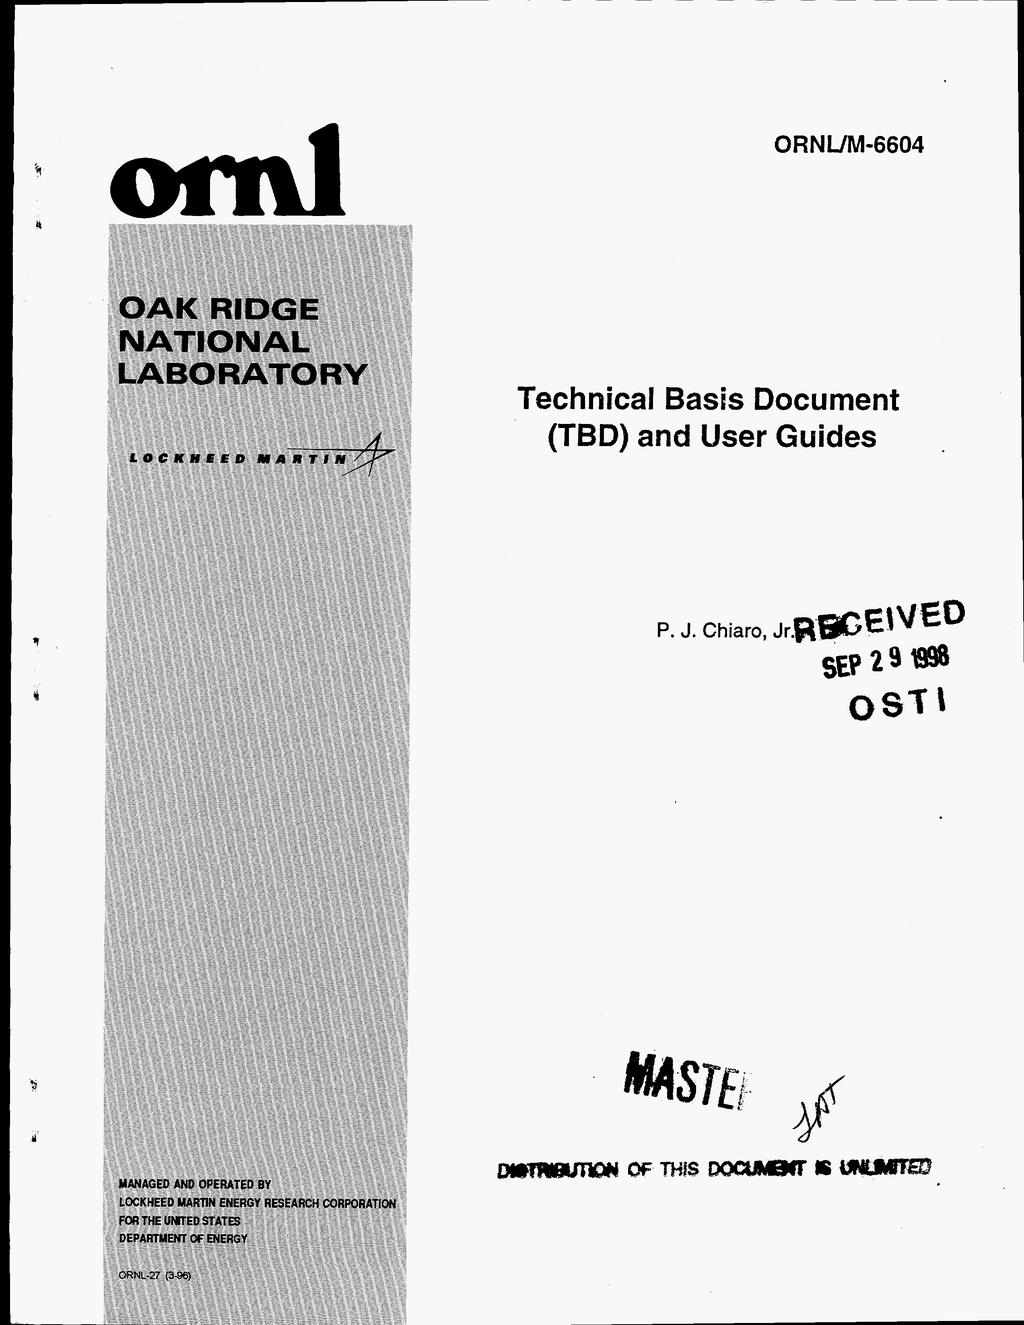 ORNUM-6604 Technical Basis Document